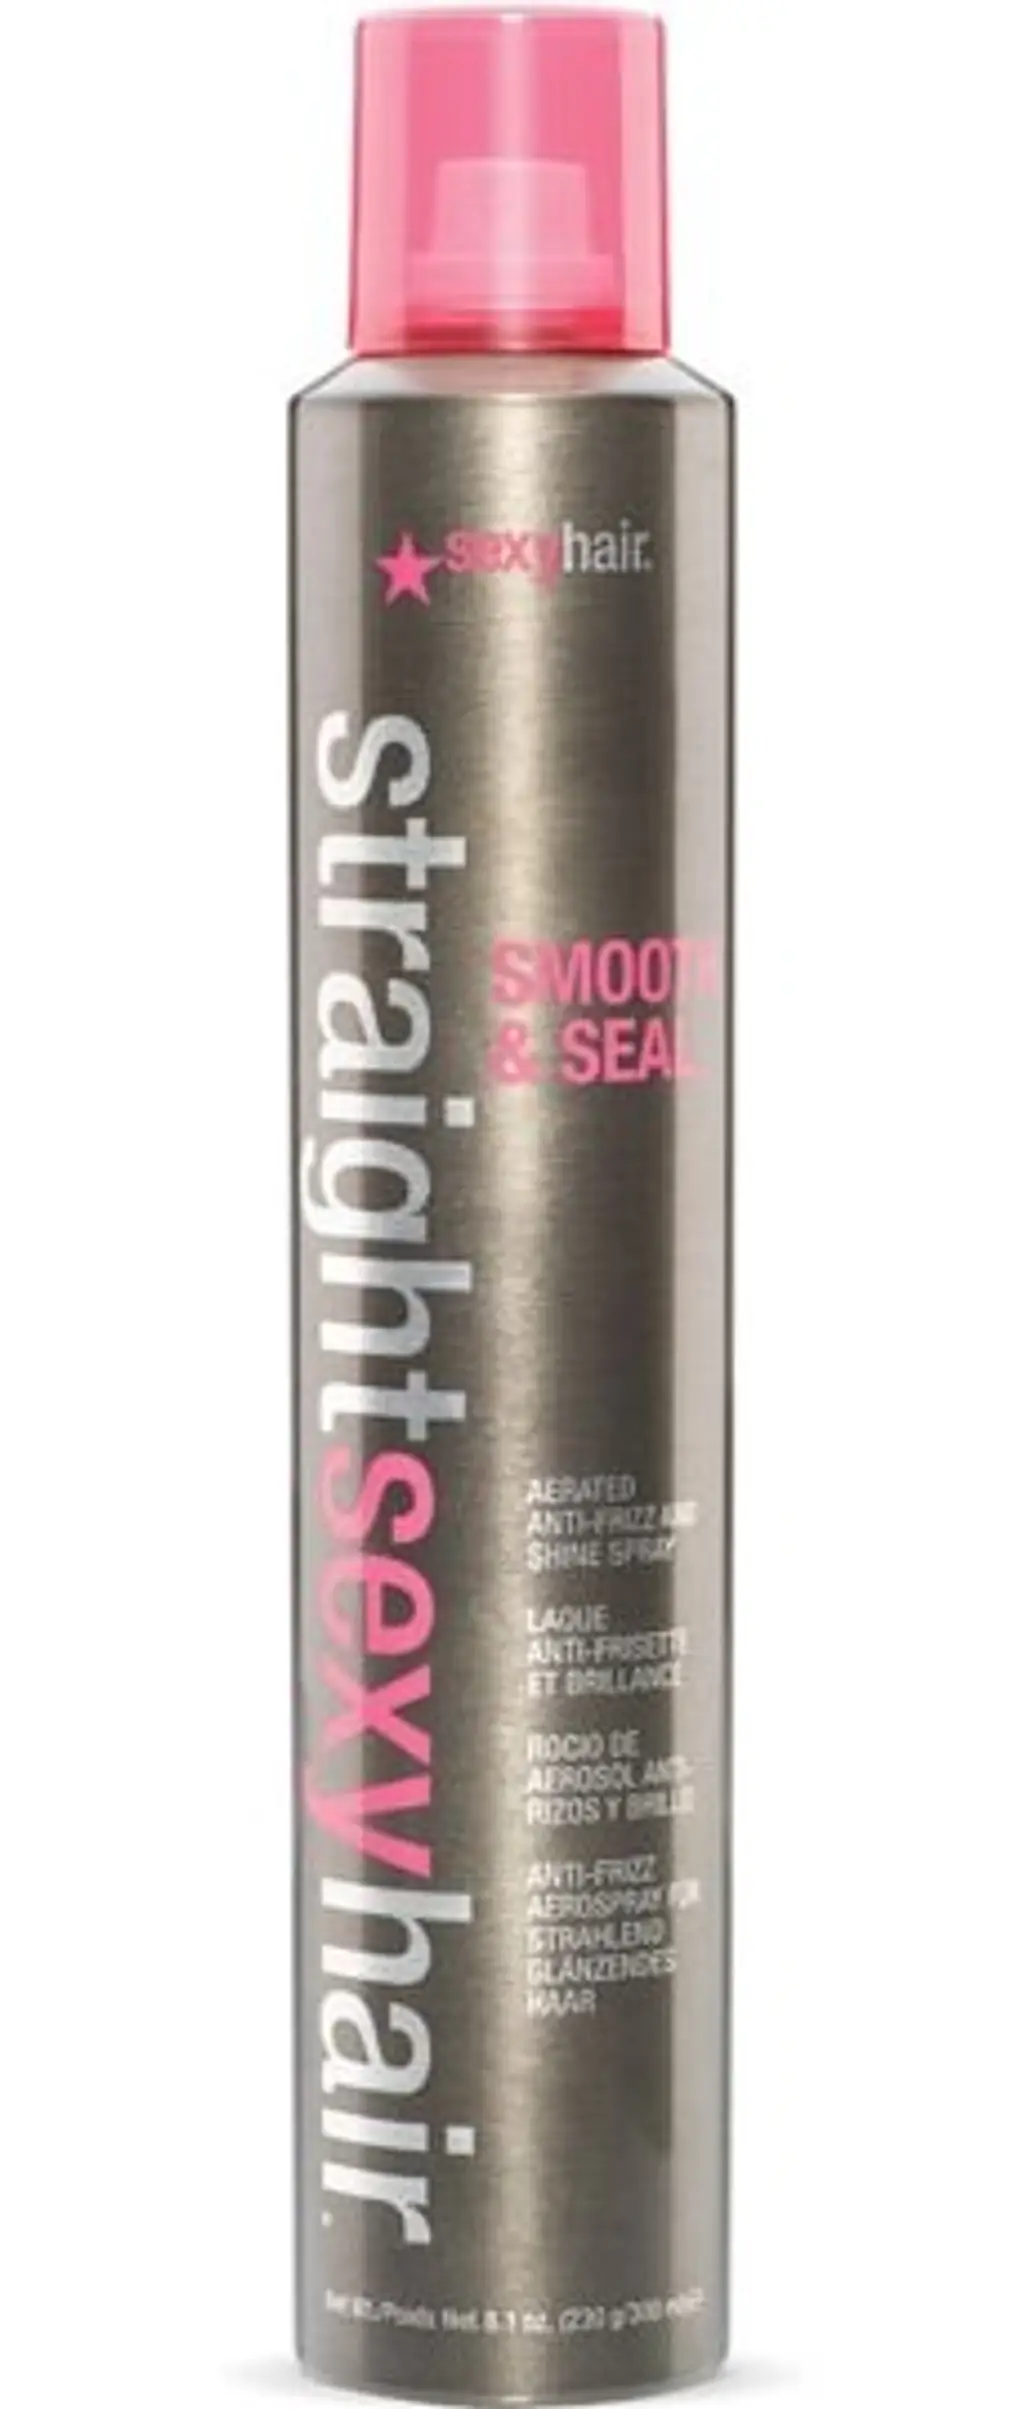 Sexy Hair – Smooth & Seal